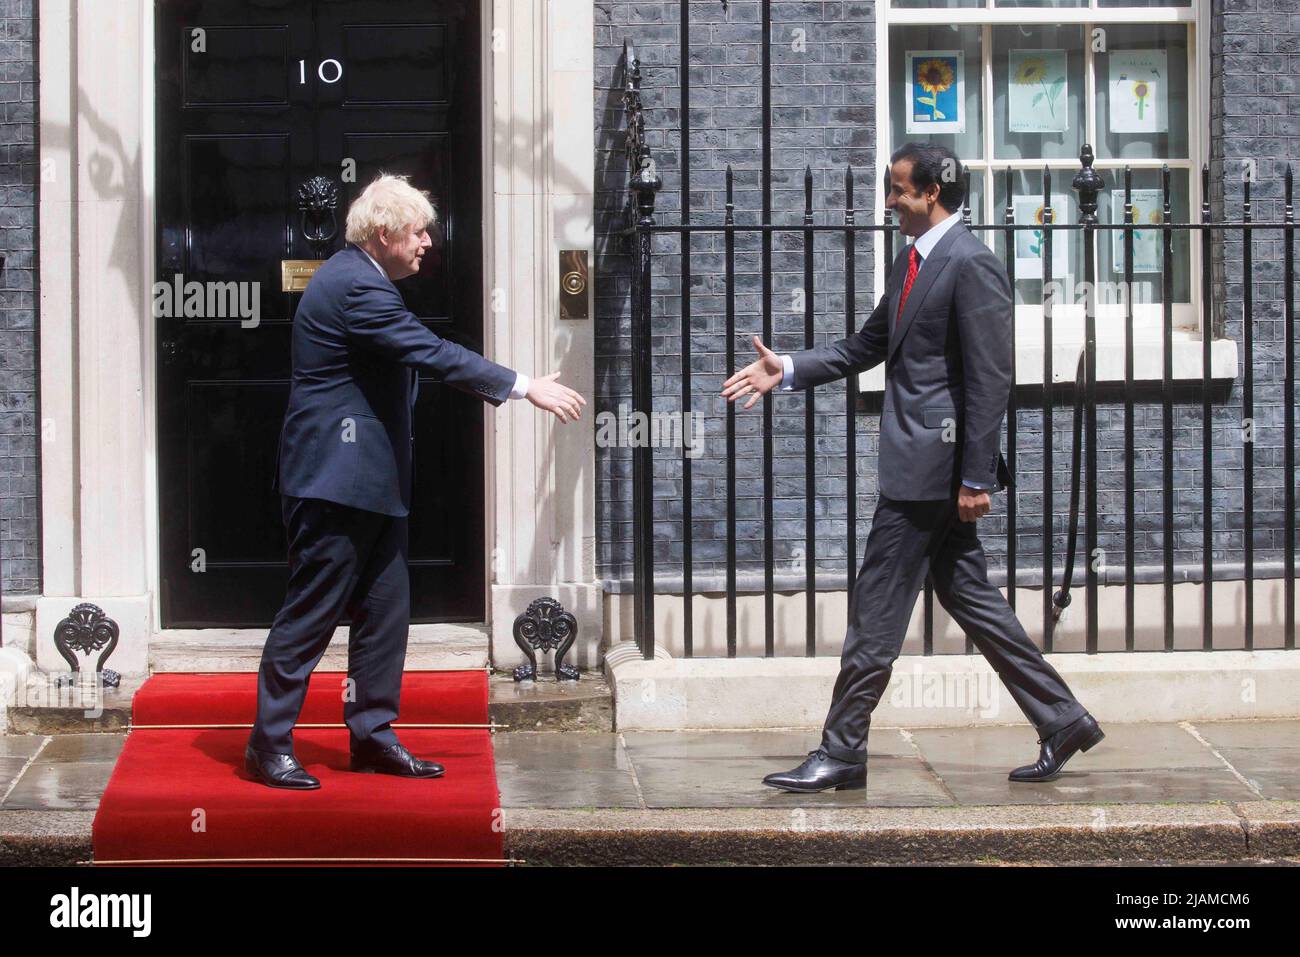 The Emir of Qatar, Sheikh Tamim bin Hamad Al Thani, arrives at 10 Downing Street for talks with UK Prime Minister, Boris Johnson. Stock Photo